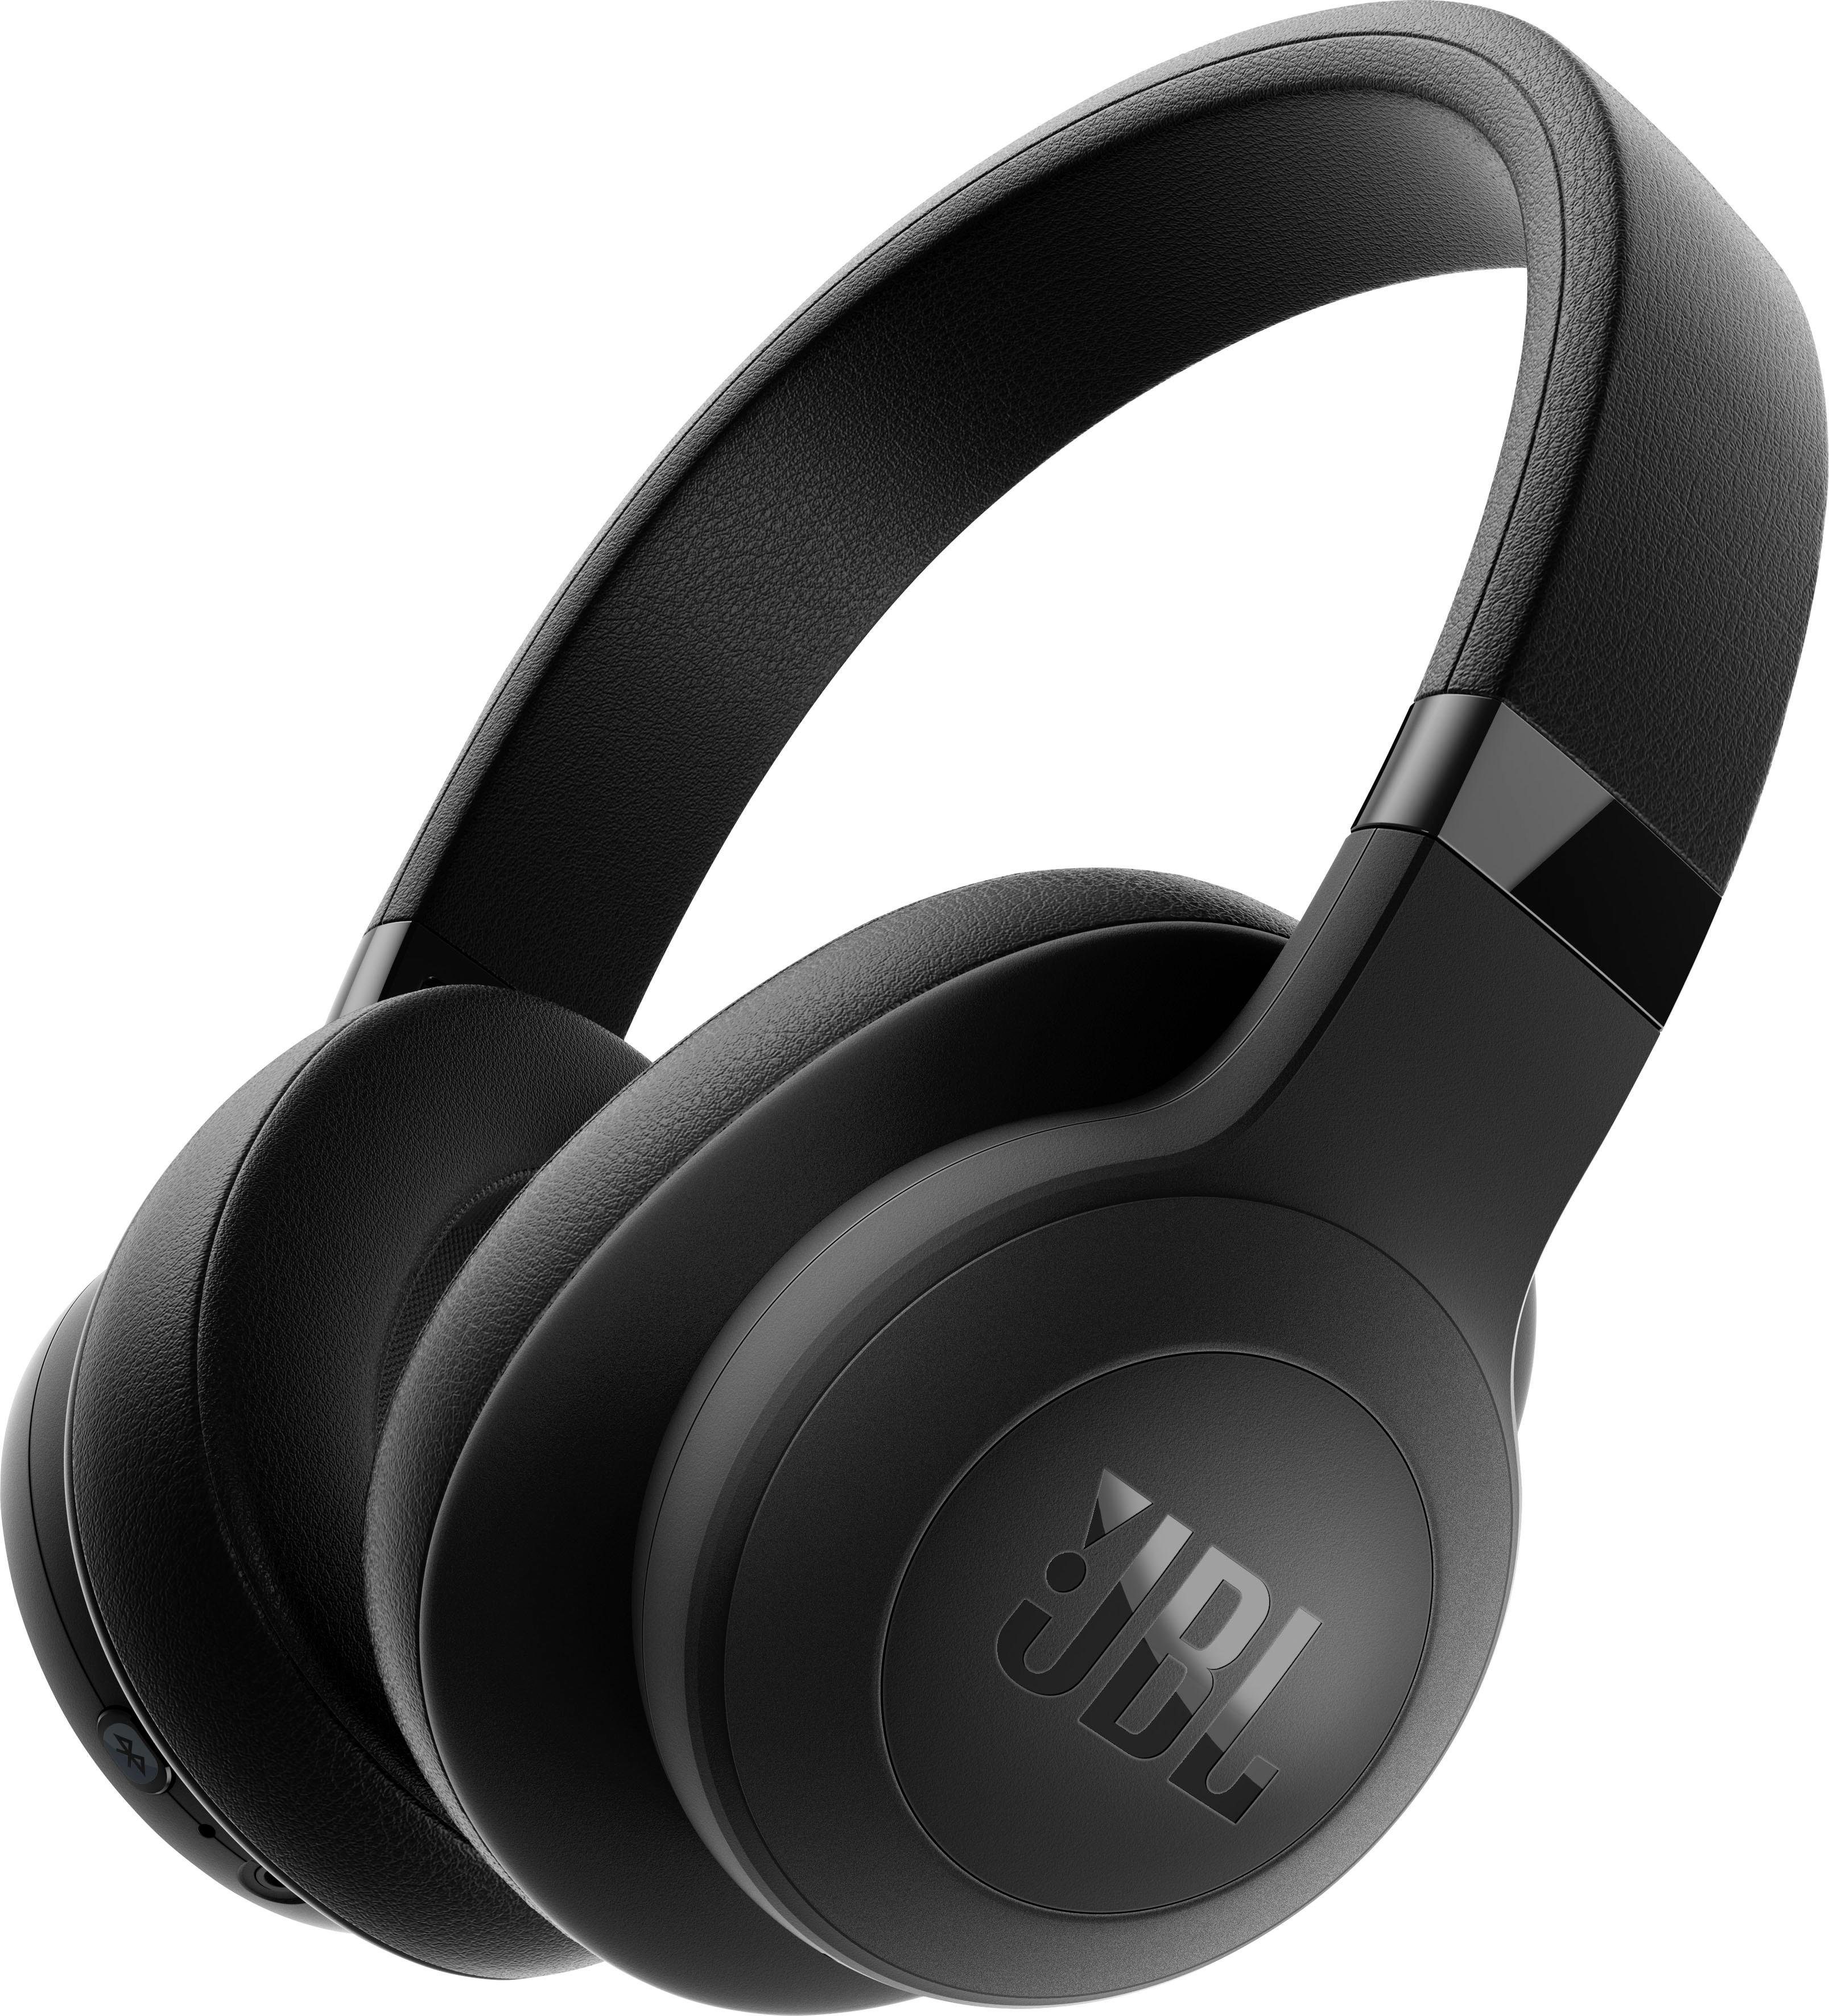 JBL »E500BT« Over-Ear-Kopfhörer (Bluetooth) kaufen | OTTO